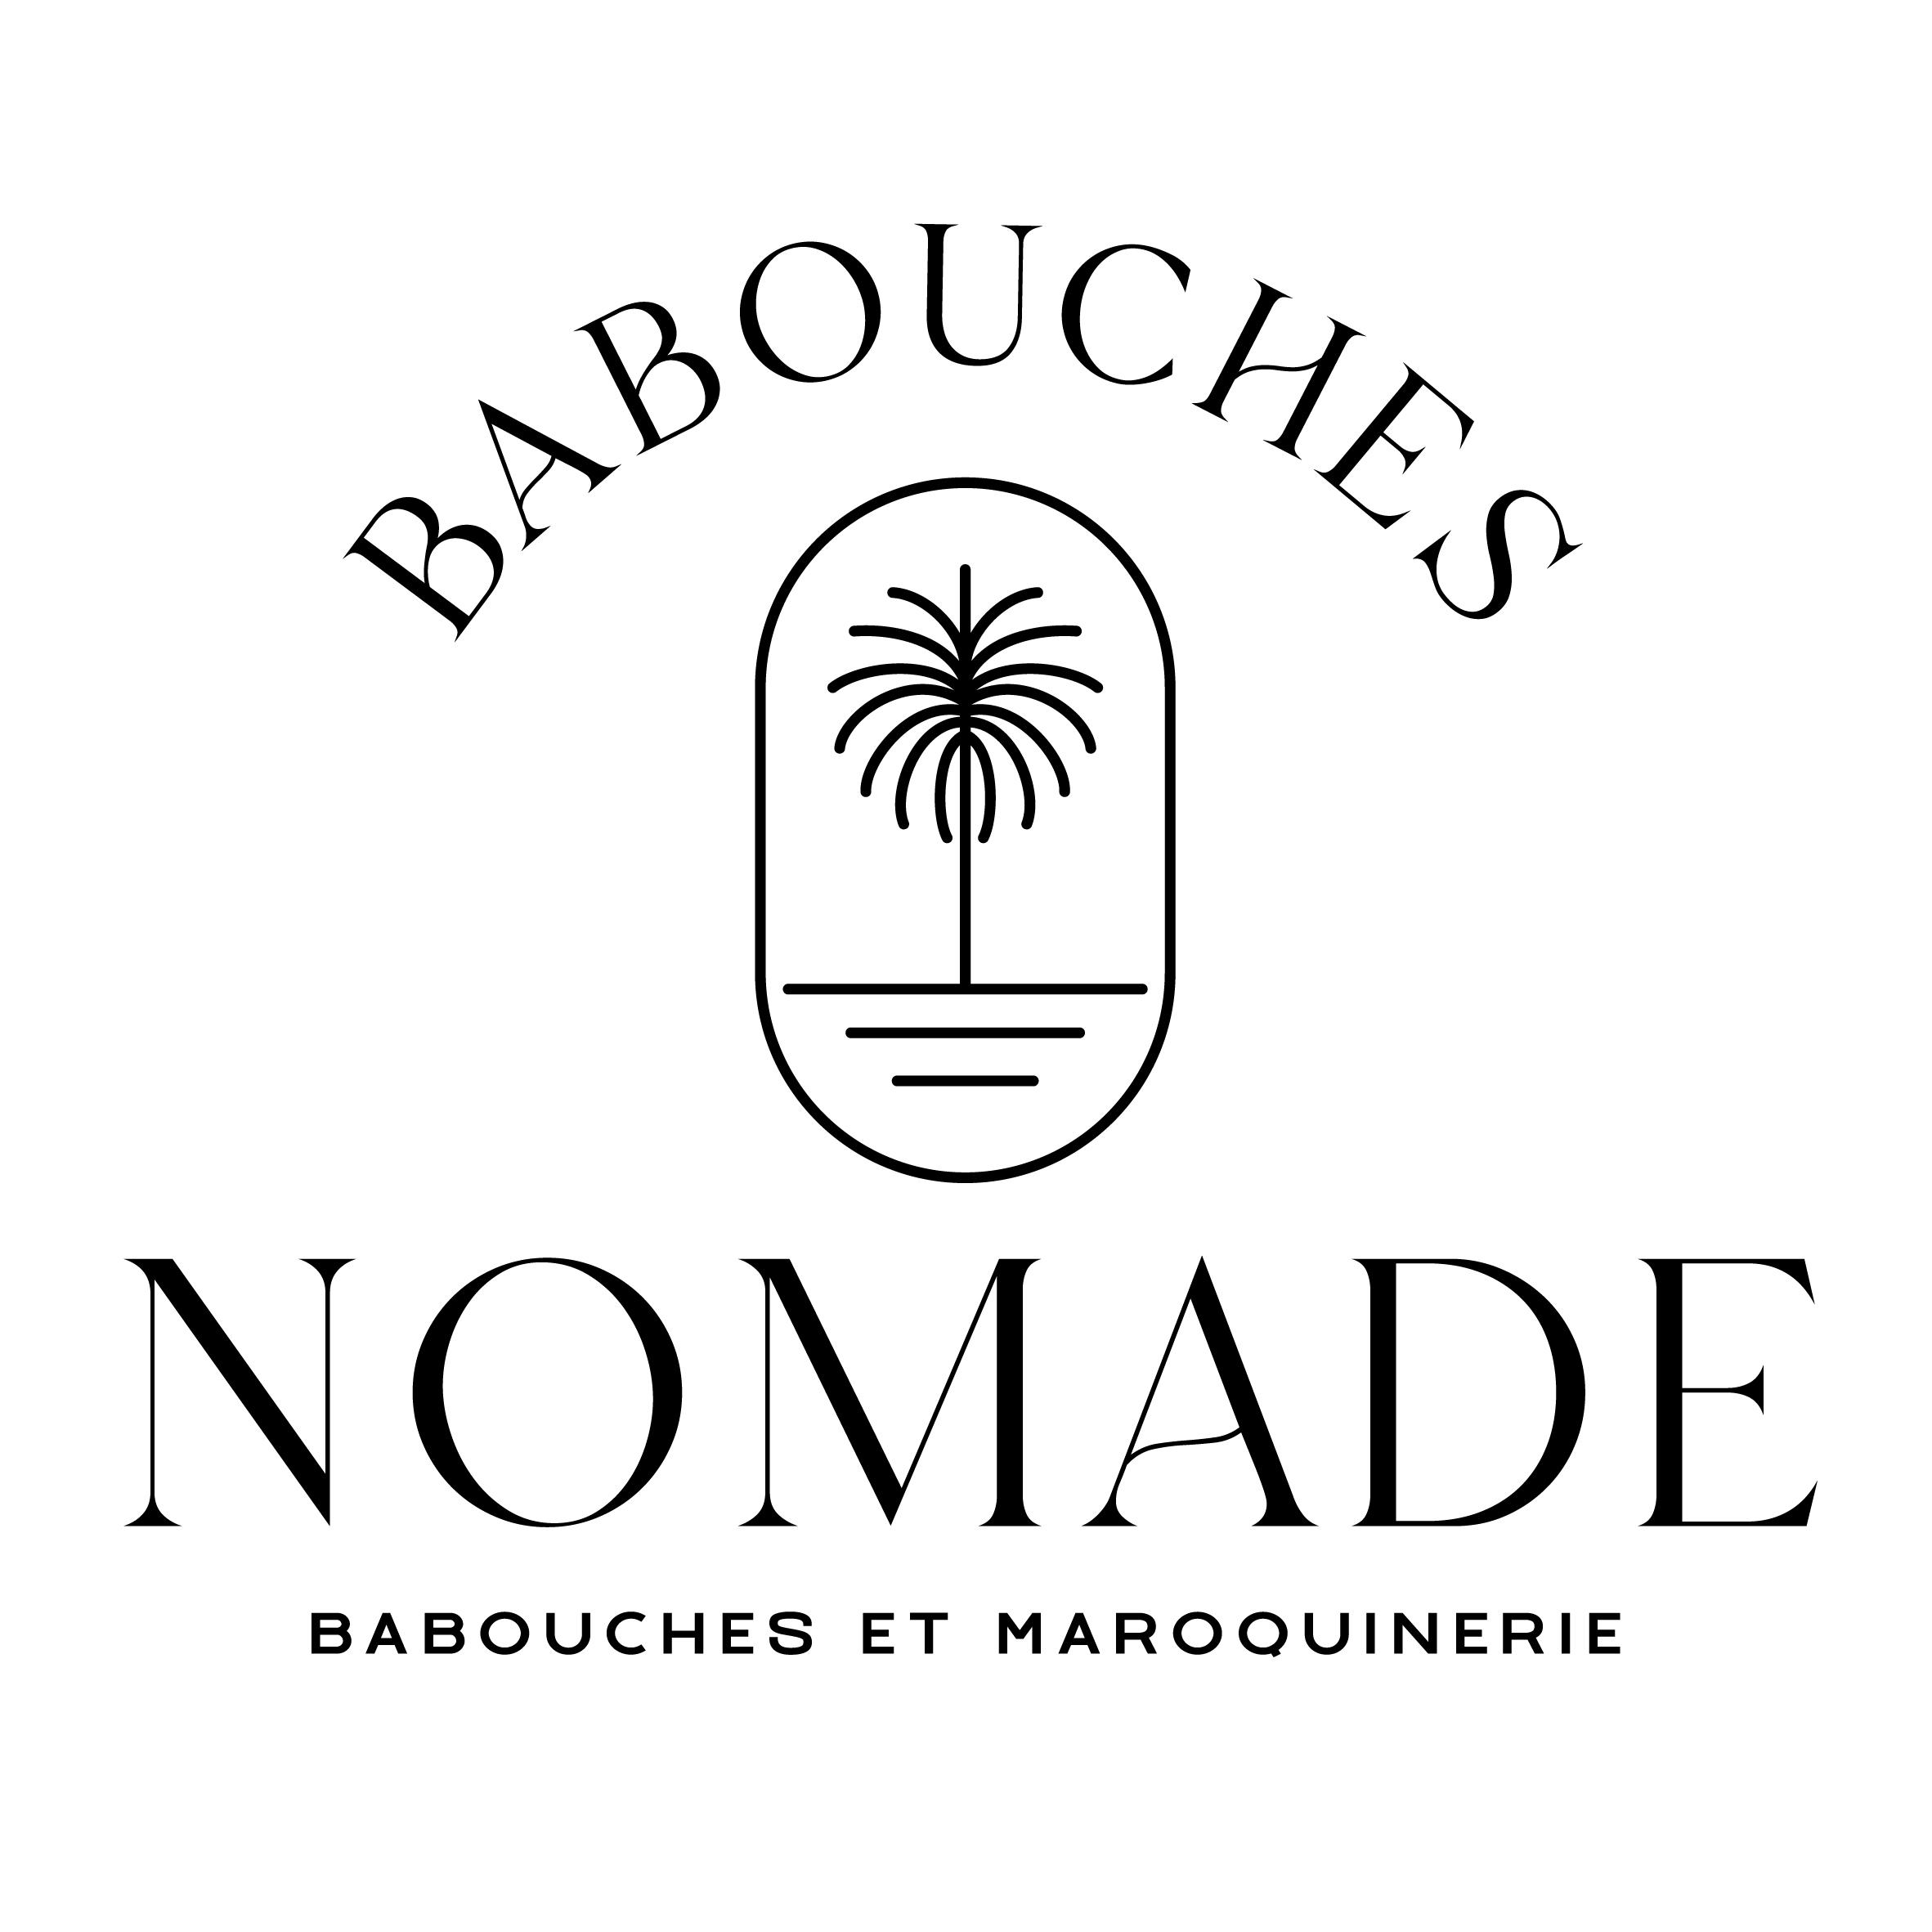 Babouches Nomade, Spécialiste depuis 2003 en ventes de babouches artisanales